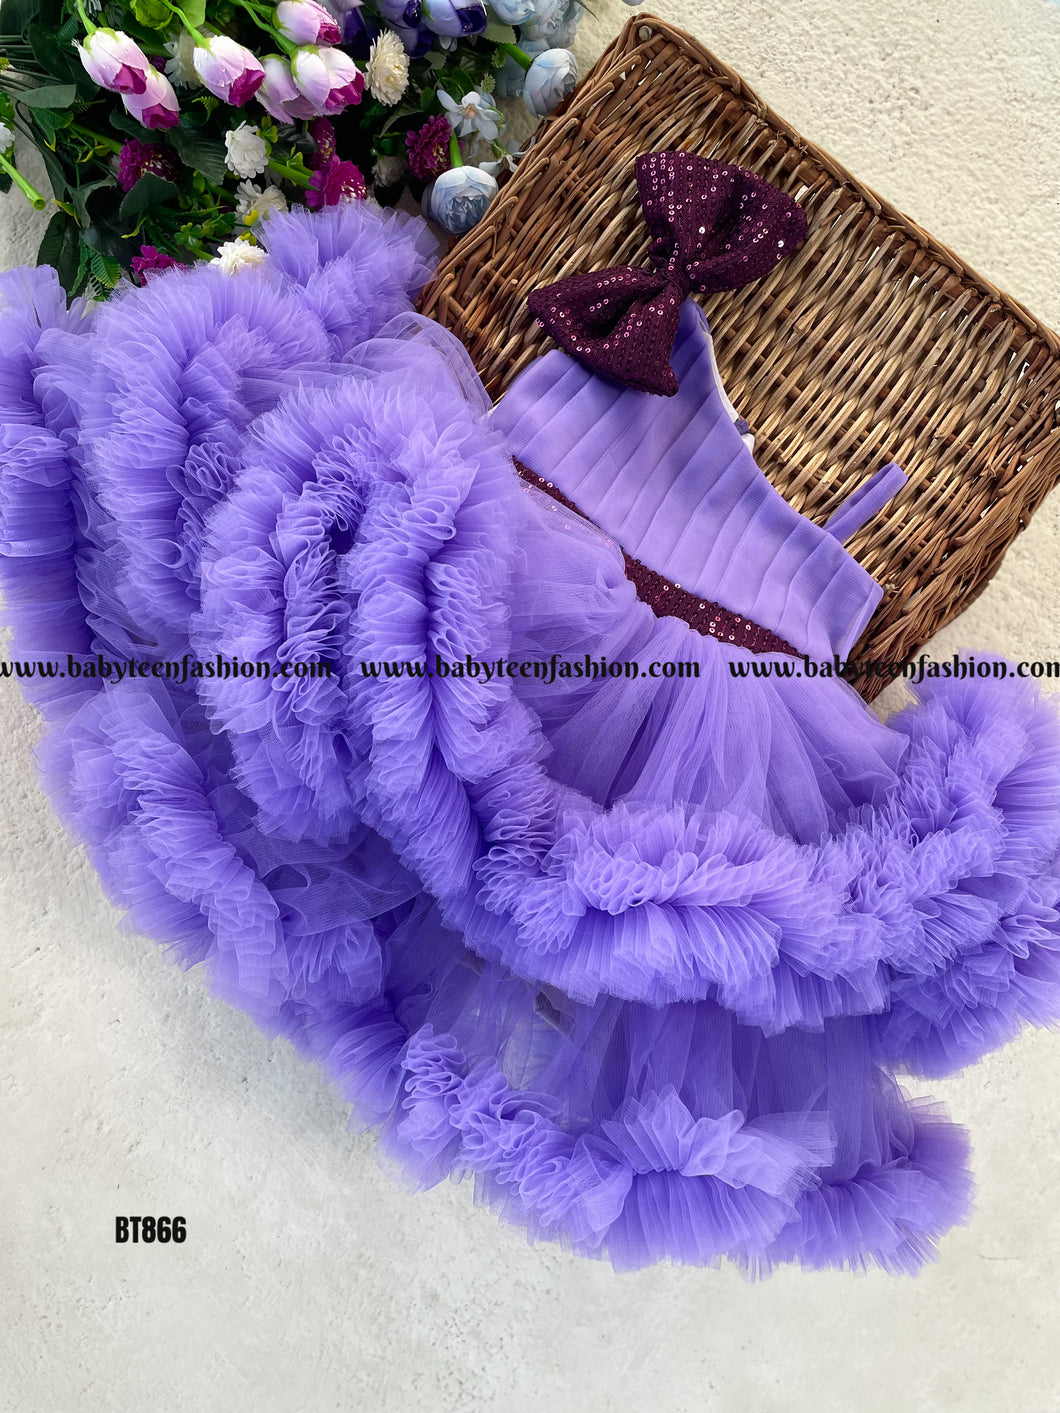 BT866 Lavender Dream Ruffle Dress